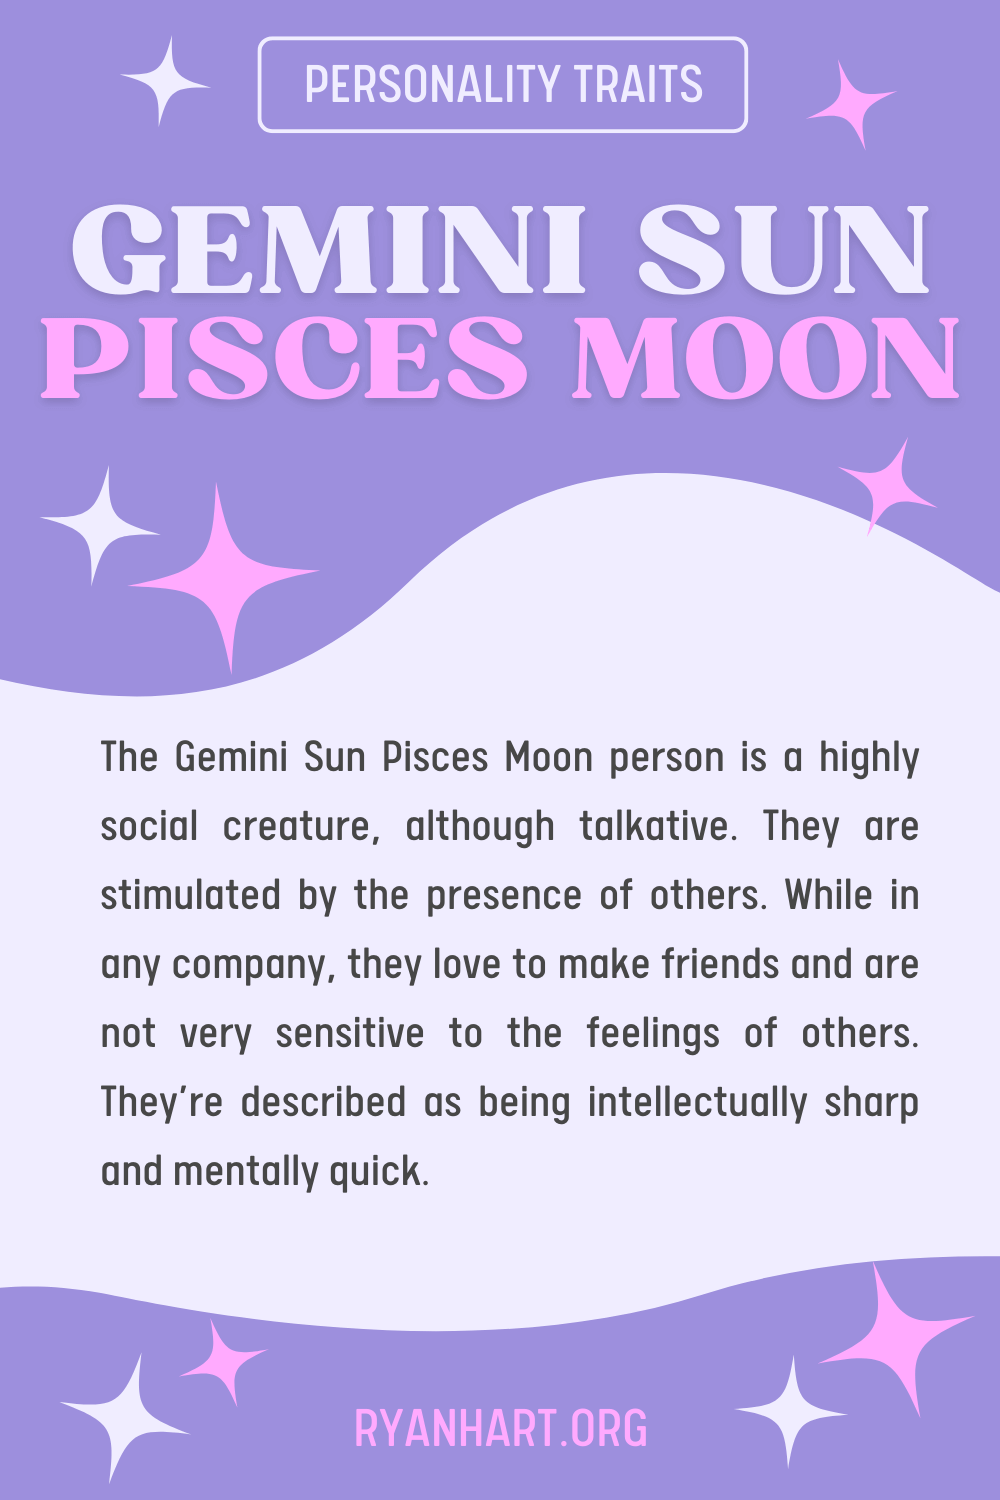 Gemini Sun Pisces Moon Description